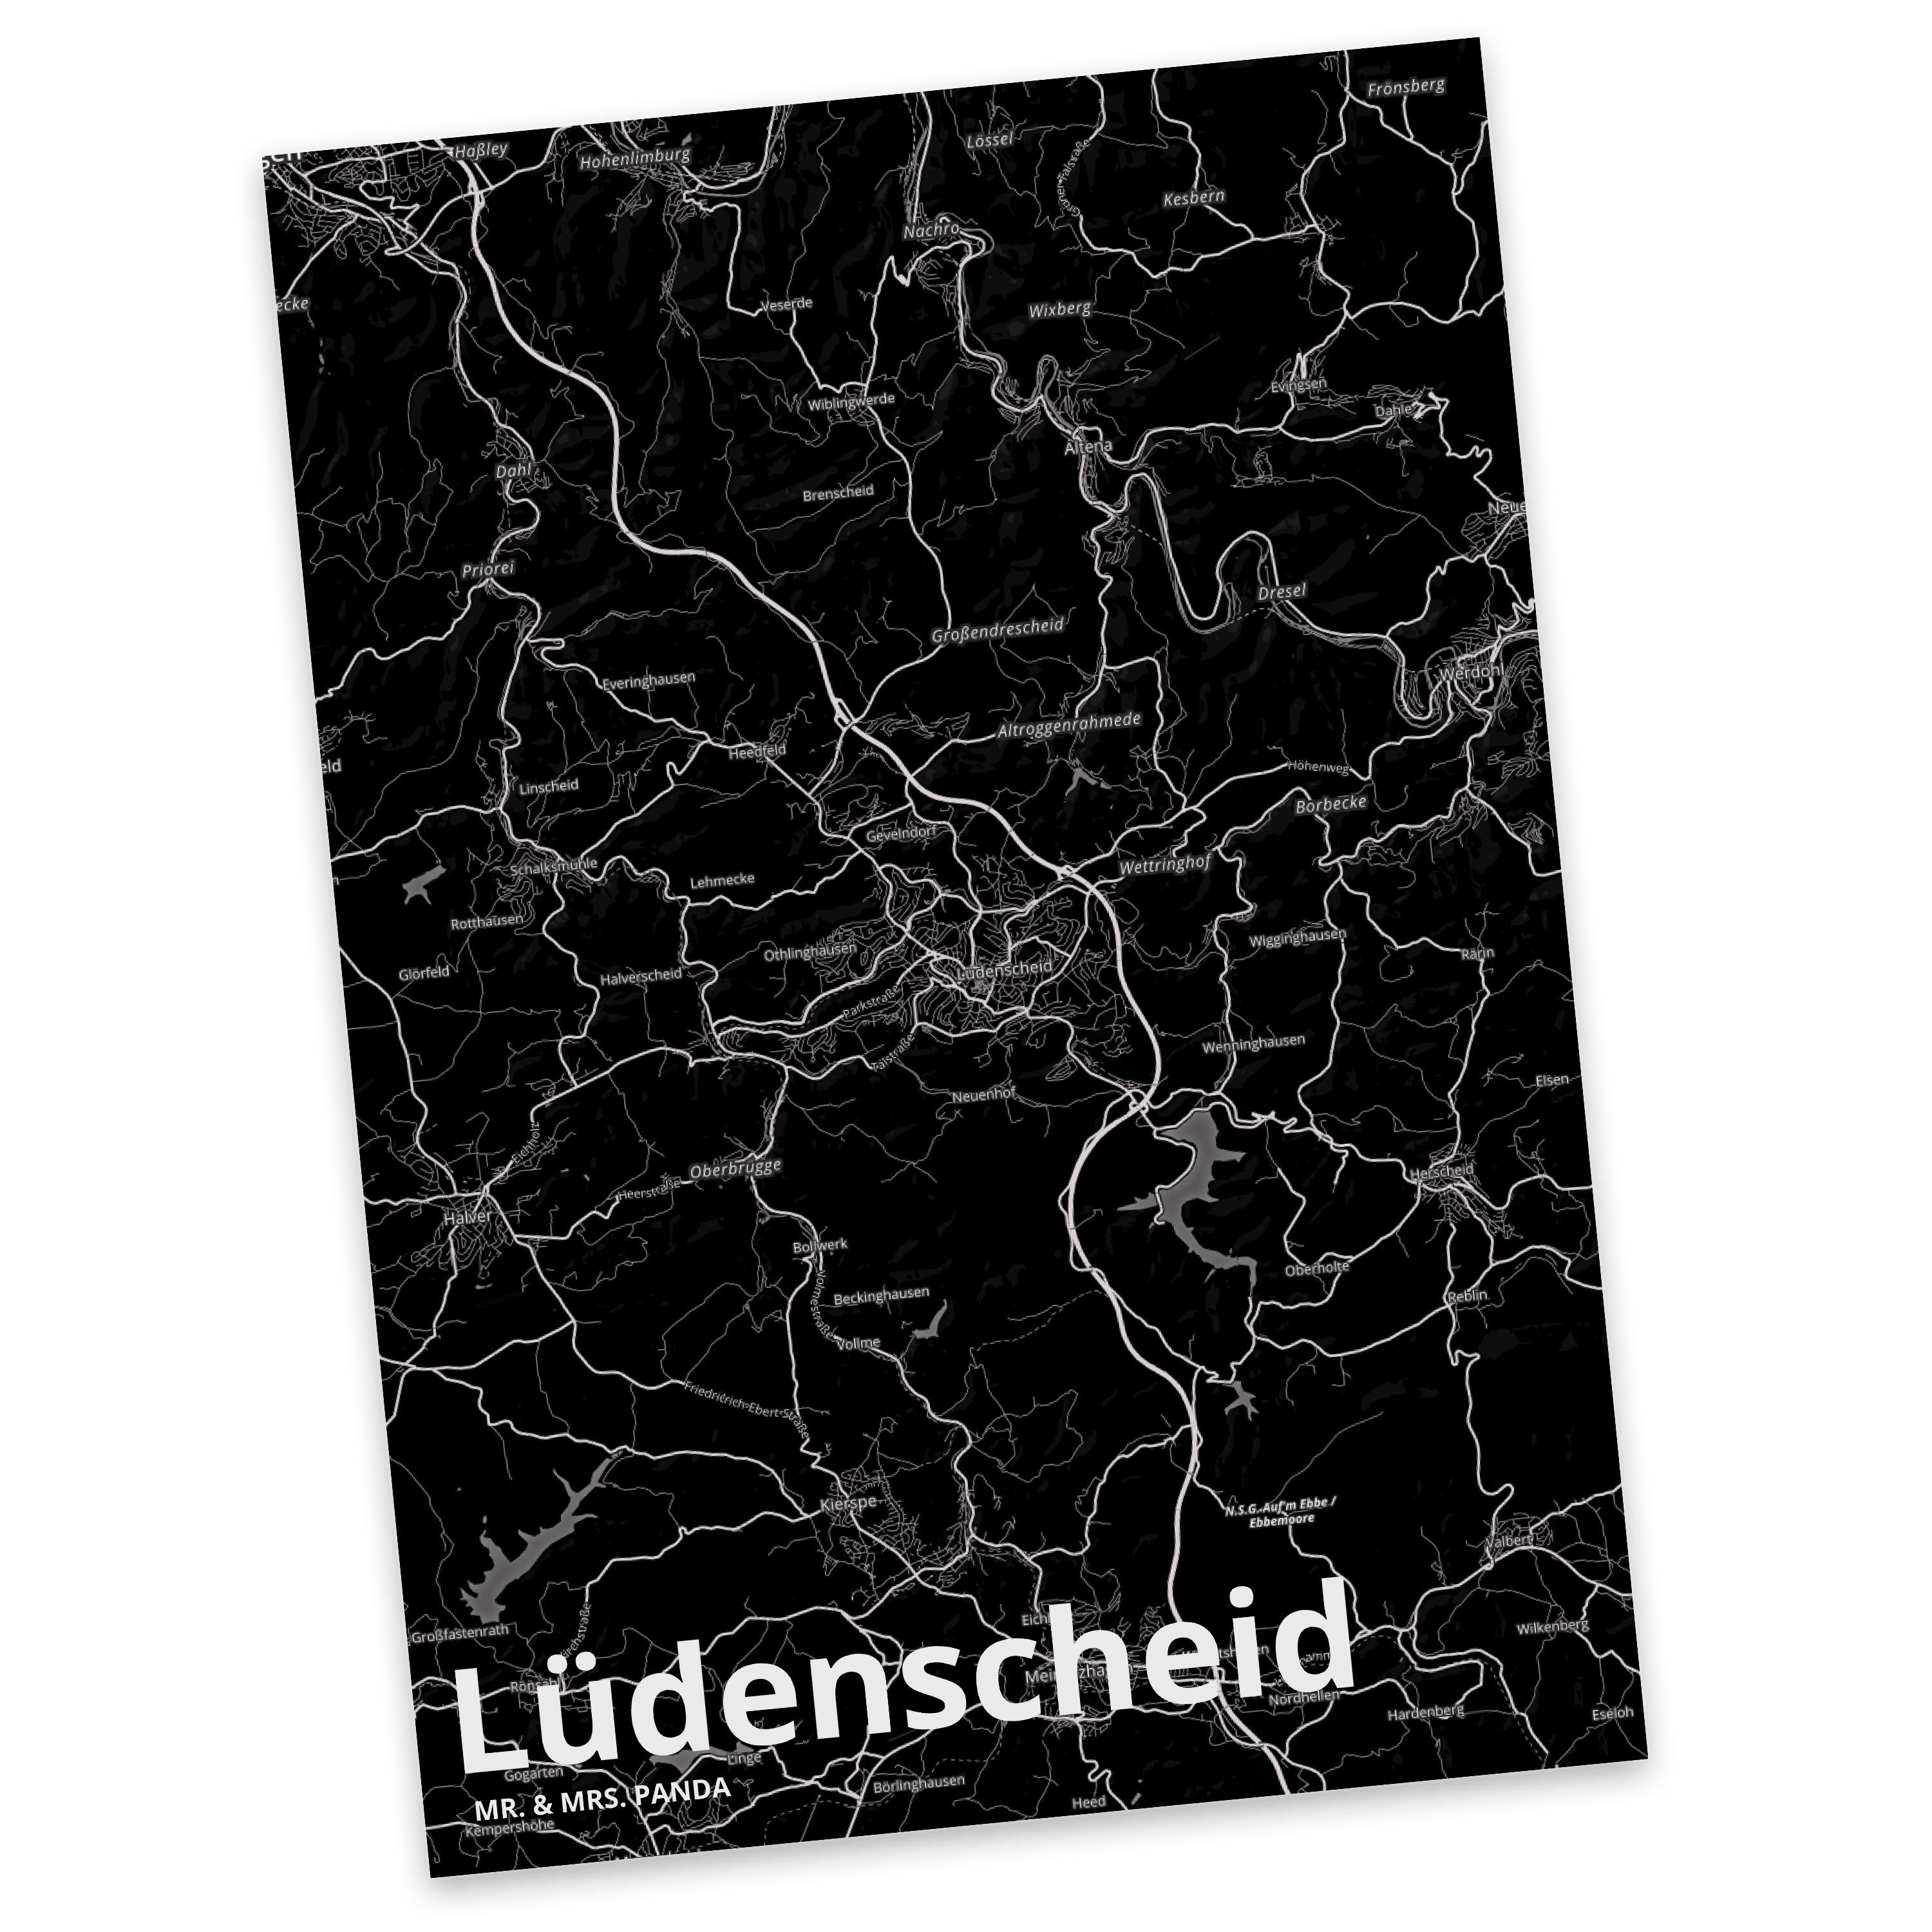 Mr. & Mrs. Panda Postkarte Lüdenscheid - Geschenk, Karte, Stadt Dorf Karte Landkarte Map Stadtpl